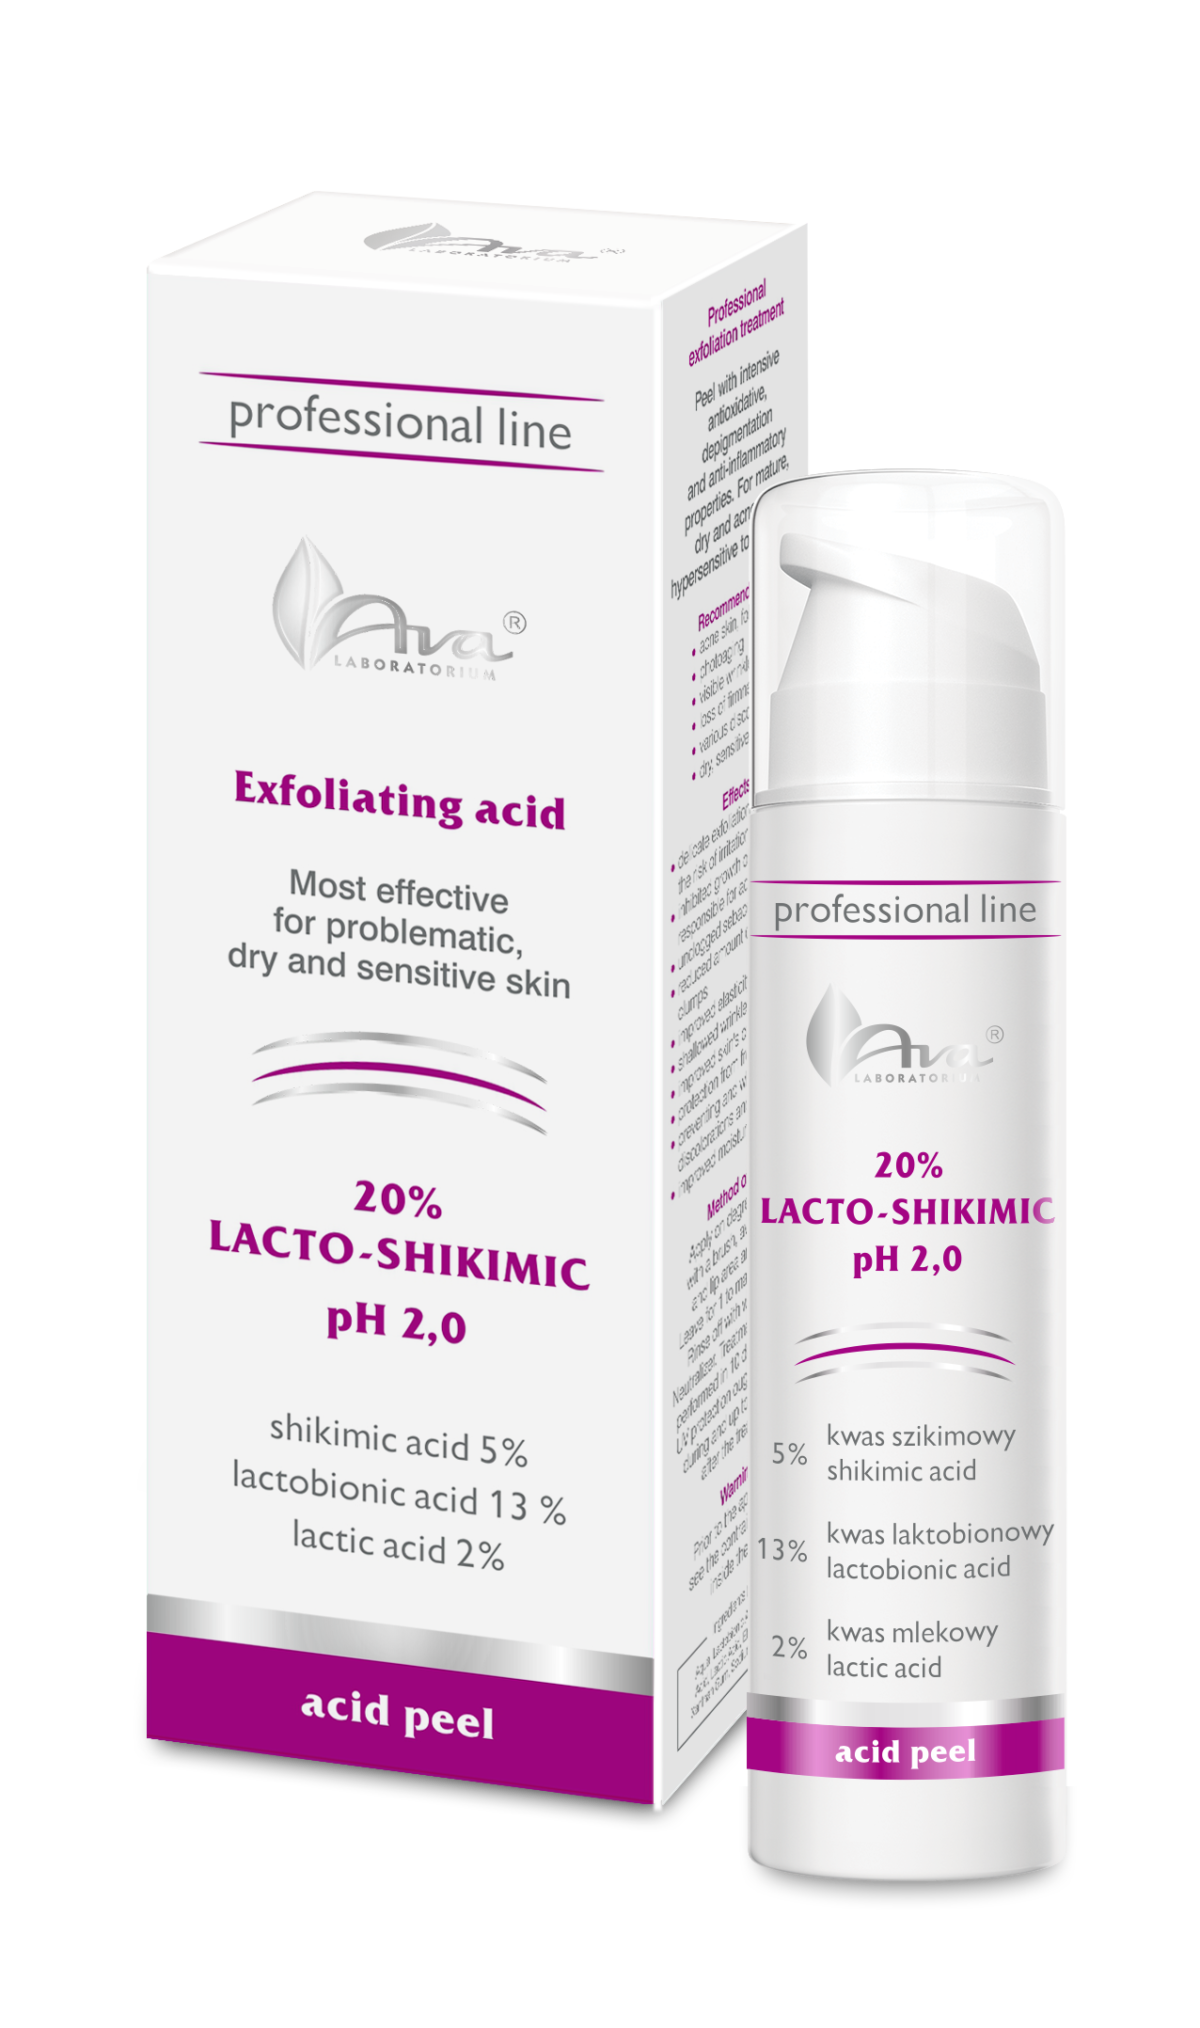 ACID PEEL Exfoliating acid 20 % Lacto – Shikimic pH 2,0